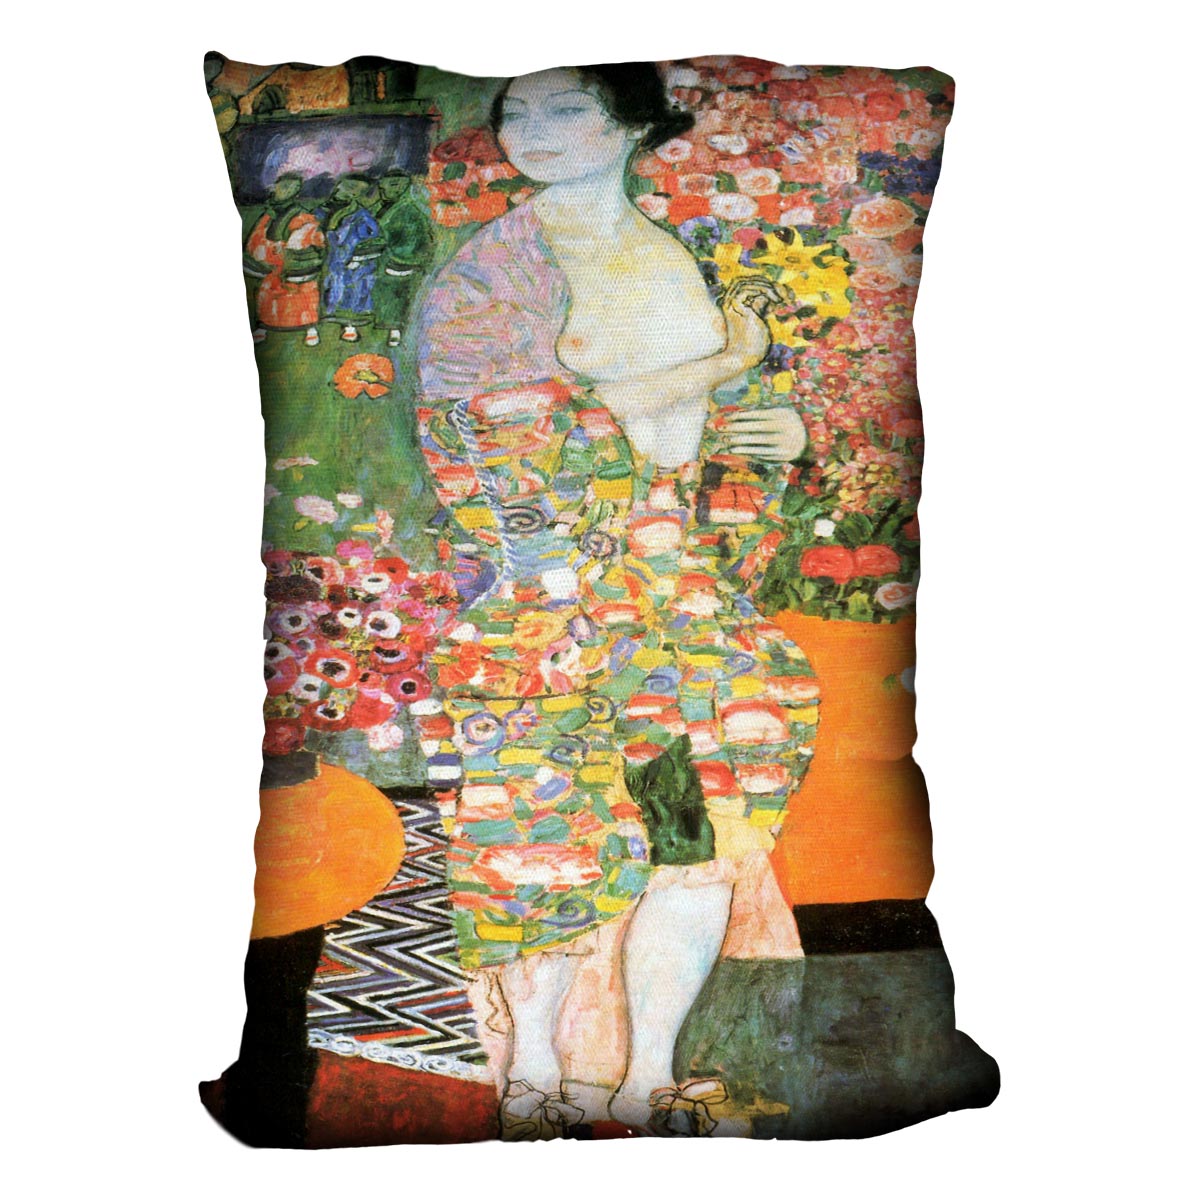 The dancer by Klimt Cushion